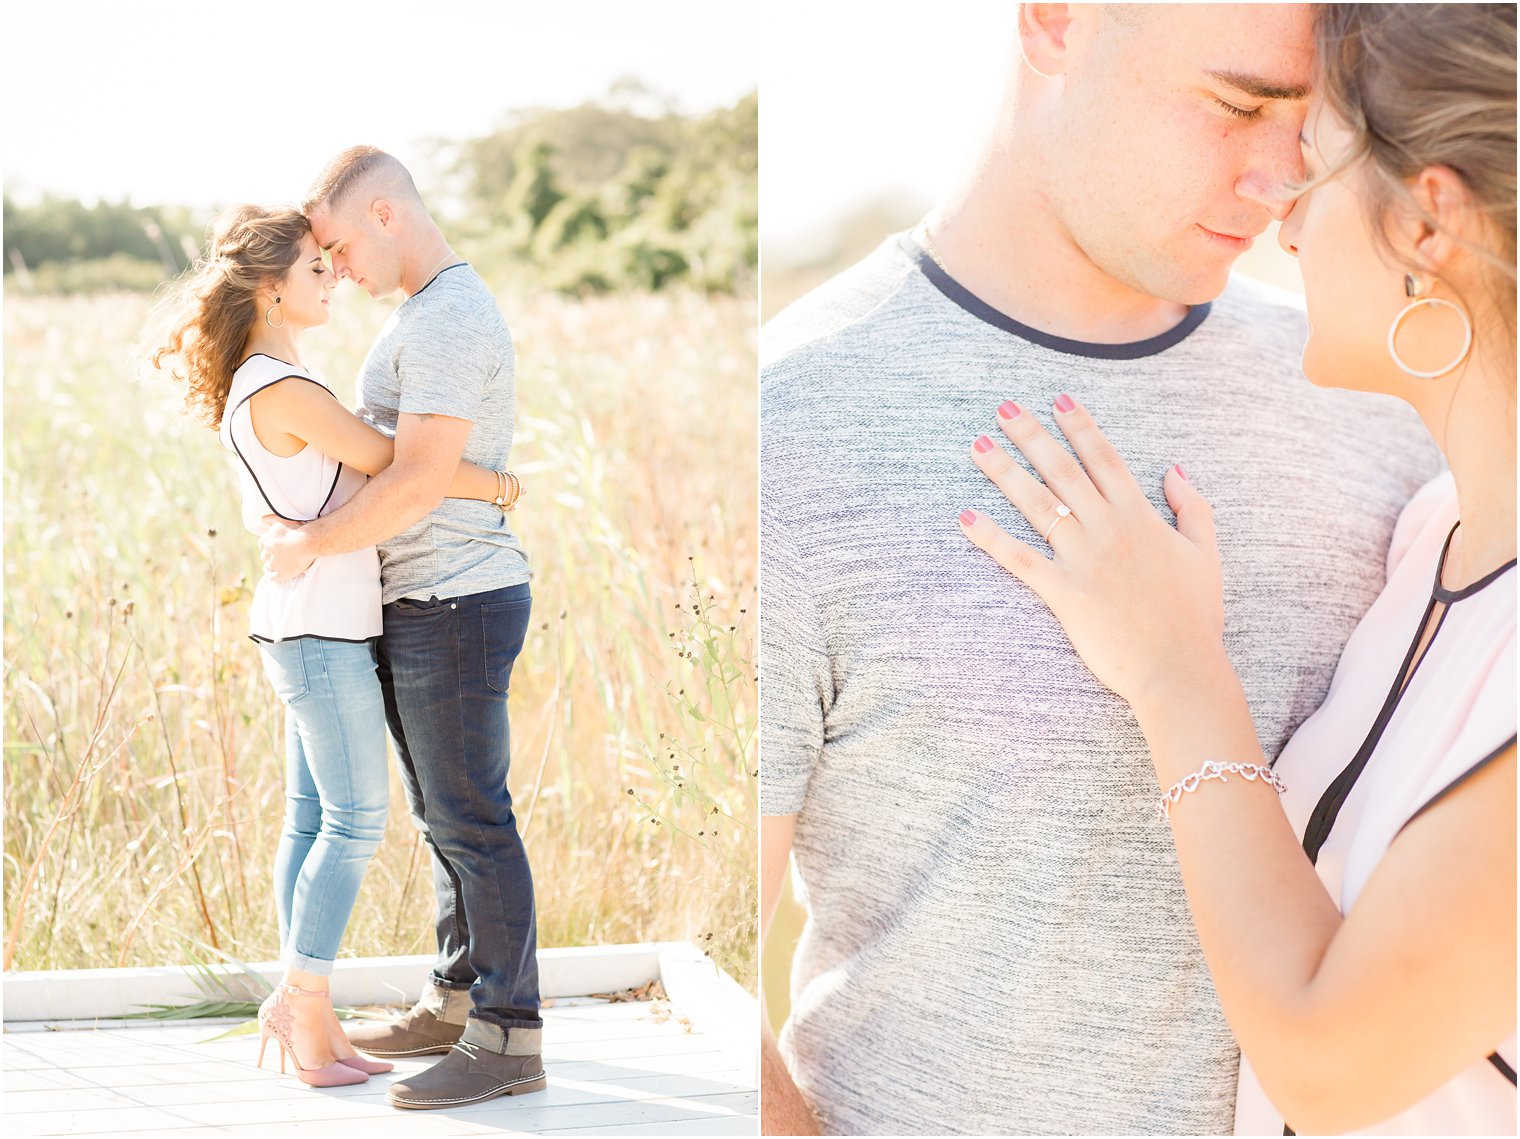 Romantic photos of engaged couple | Photos by Idalia Photography